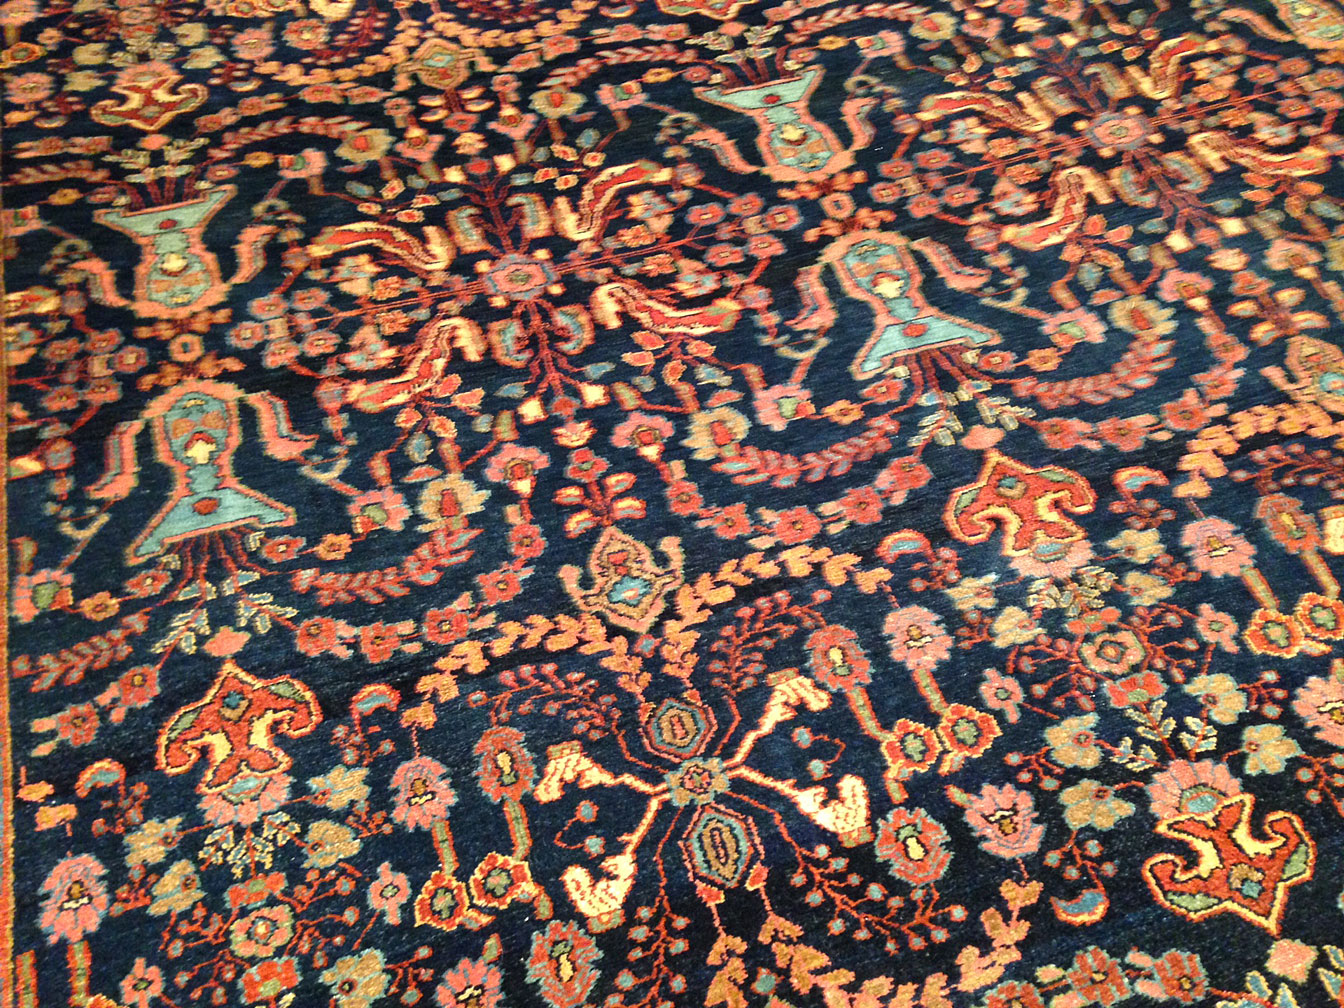 Antique bibi kabad Carpet - # 5877